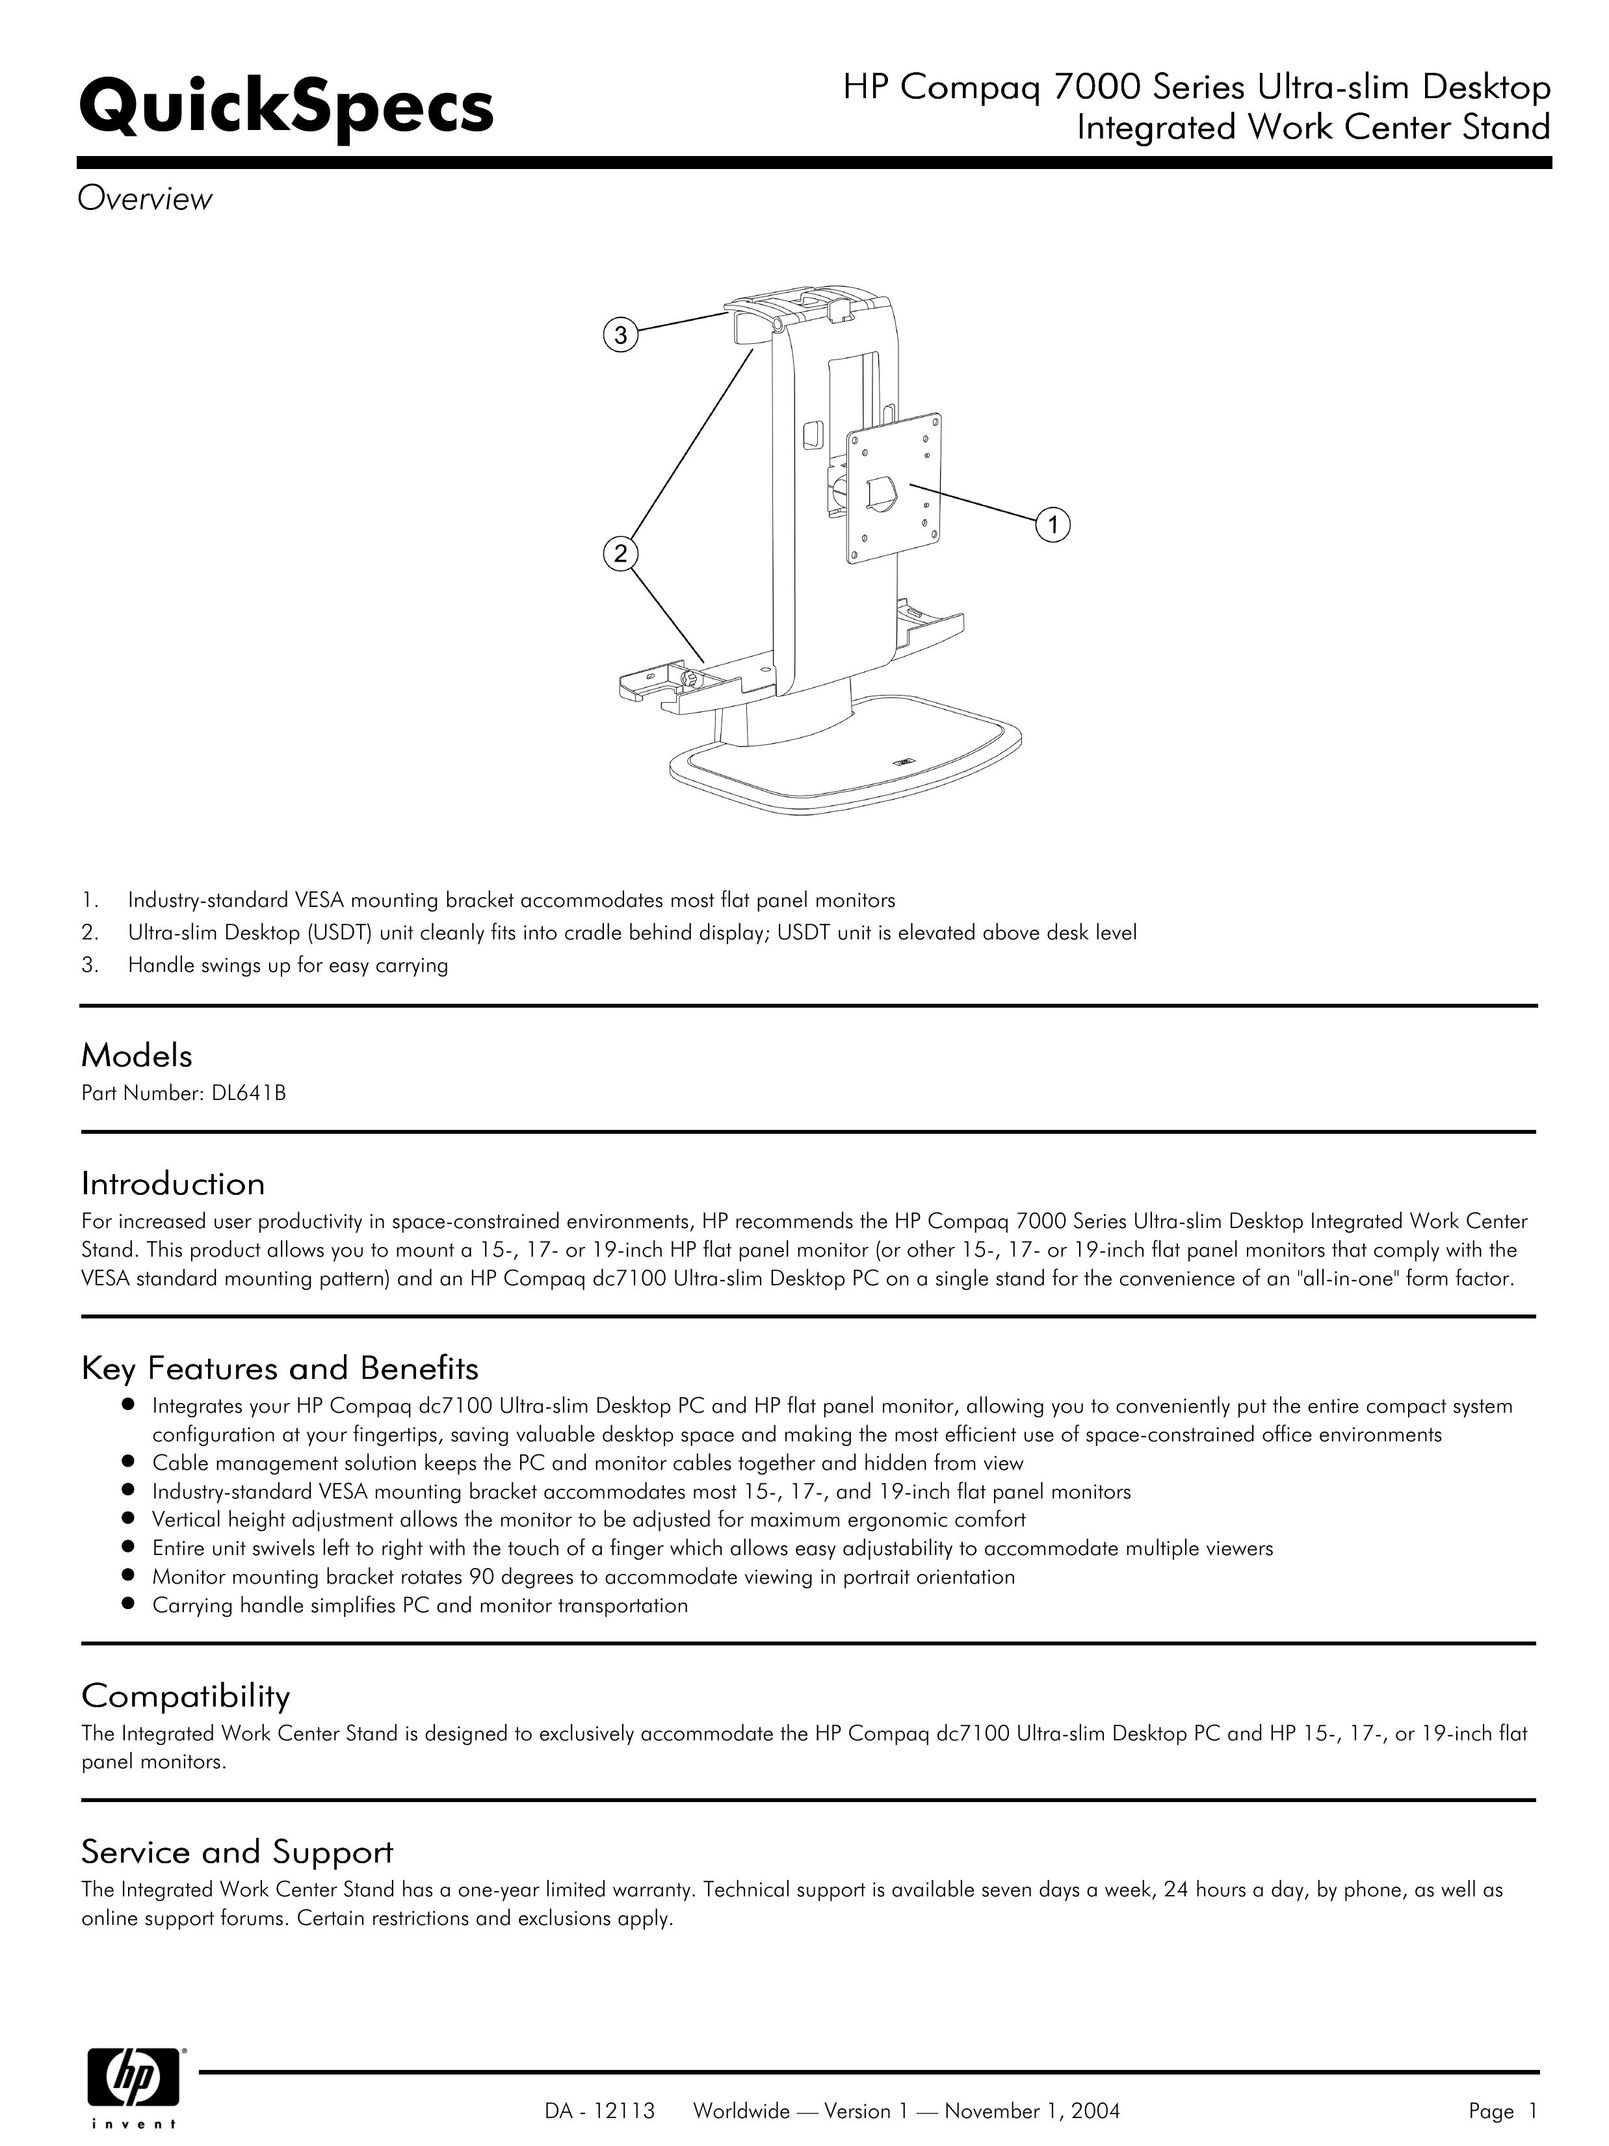 HP (Hewlett-Packard) DL641B Indoor Furnishings User Manual